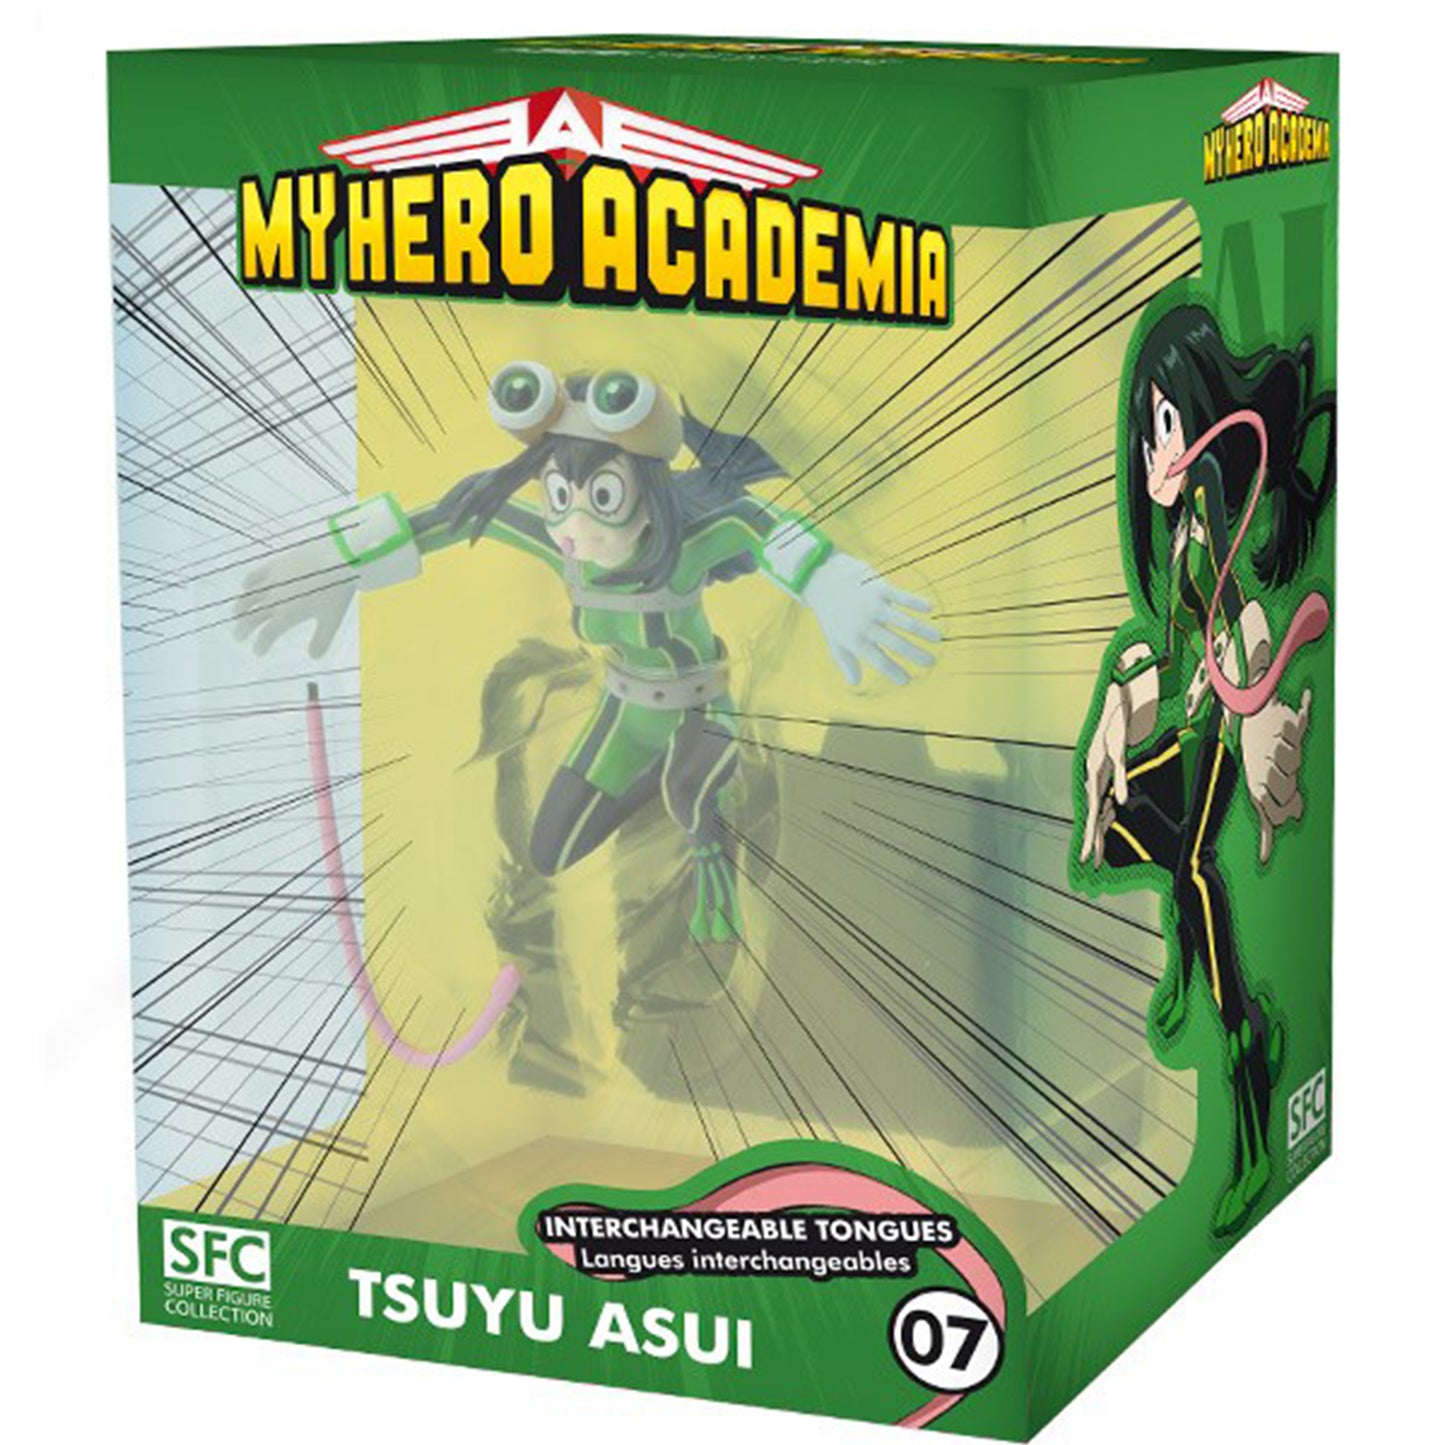 My Hero Academia - Tsuyu Asui 1:10 Scale Action Figure in Box | Happy Piranha